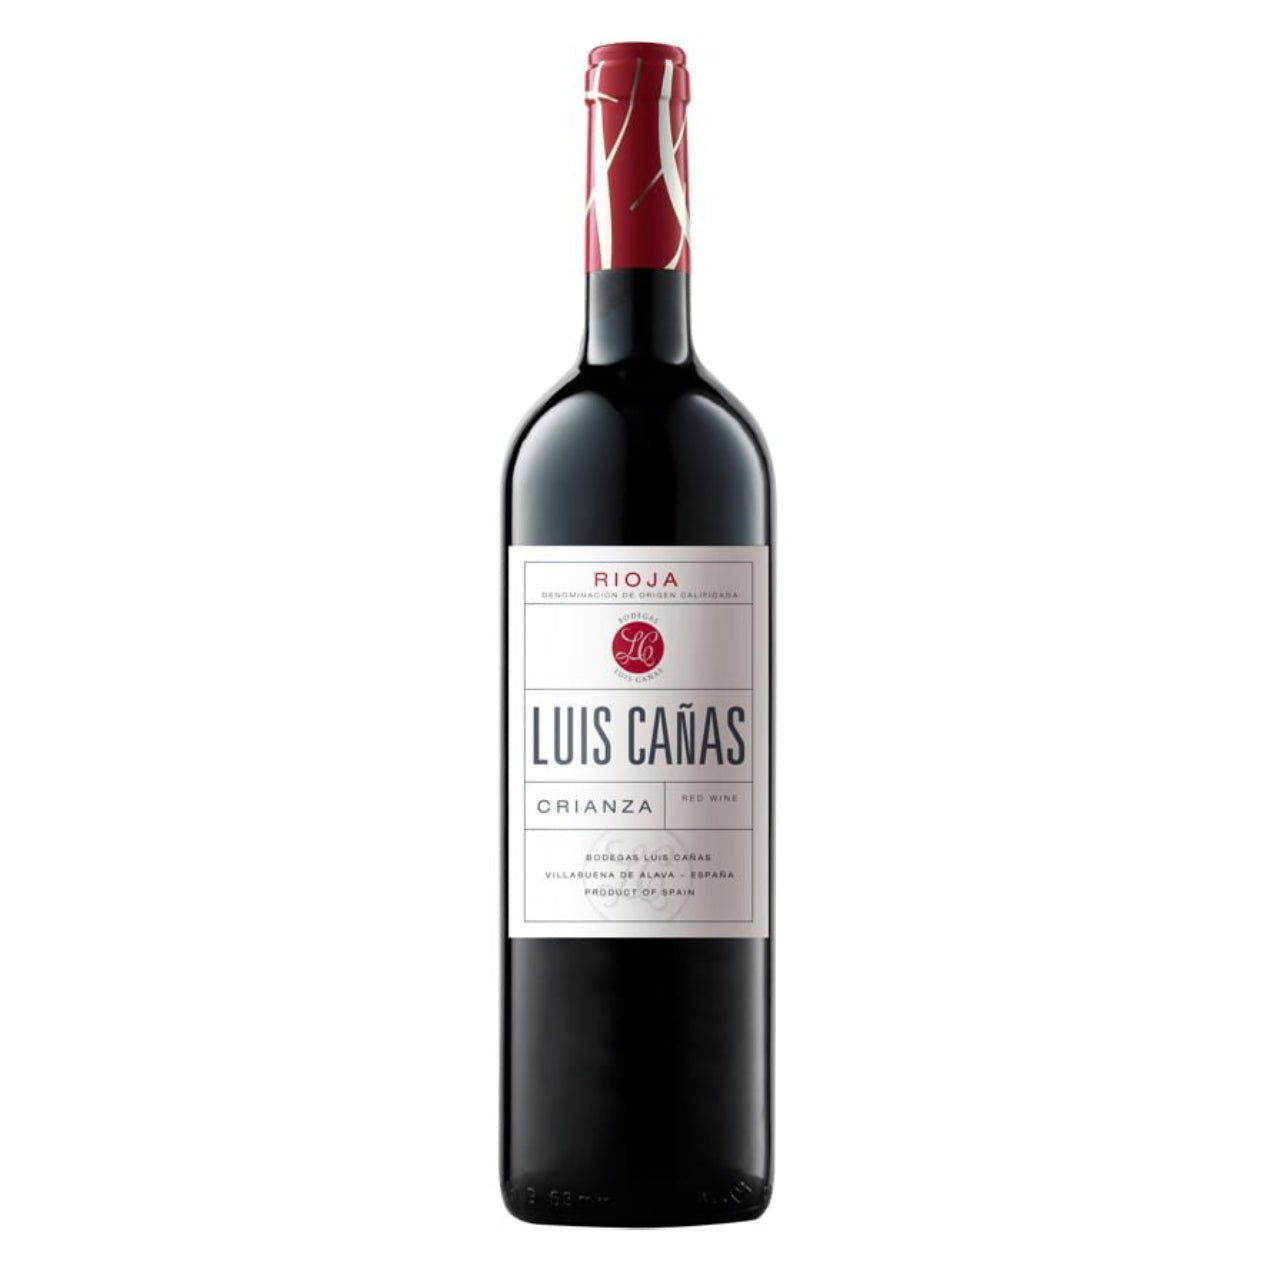 Luis Canas Crianza 2019 - Wine Spain Red - Liquor Wine Cave